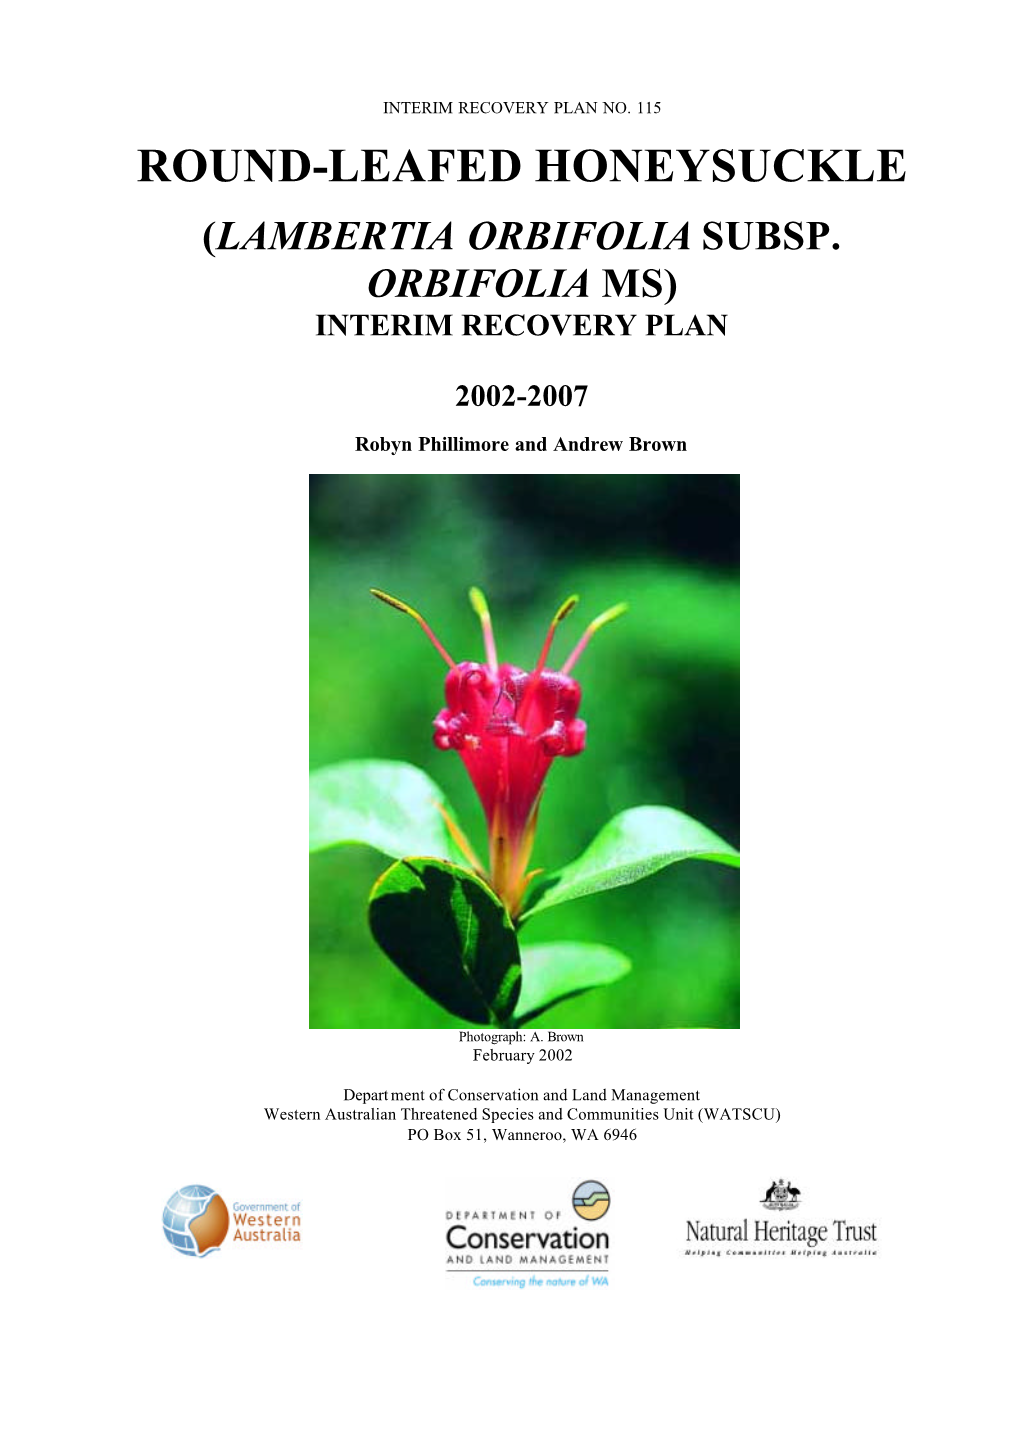 Lambertia Orbifolia Subsp. Orbifolia Ms) Interim Recovery Plan